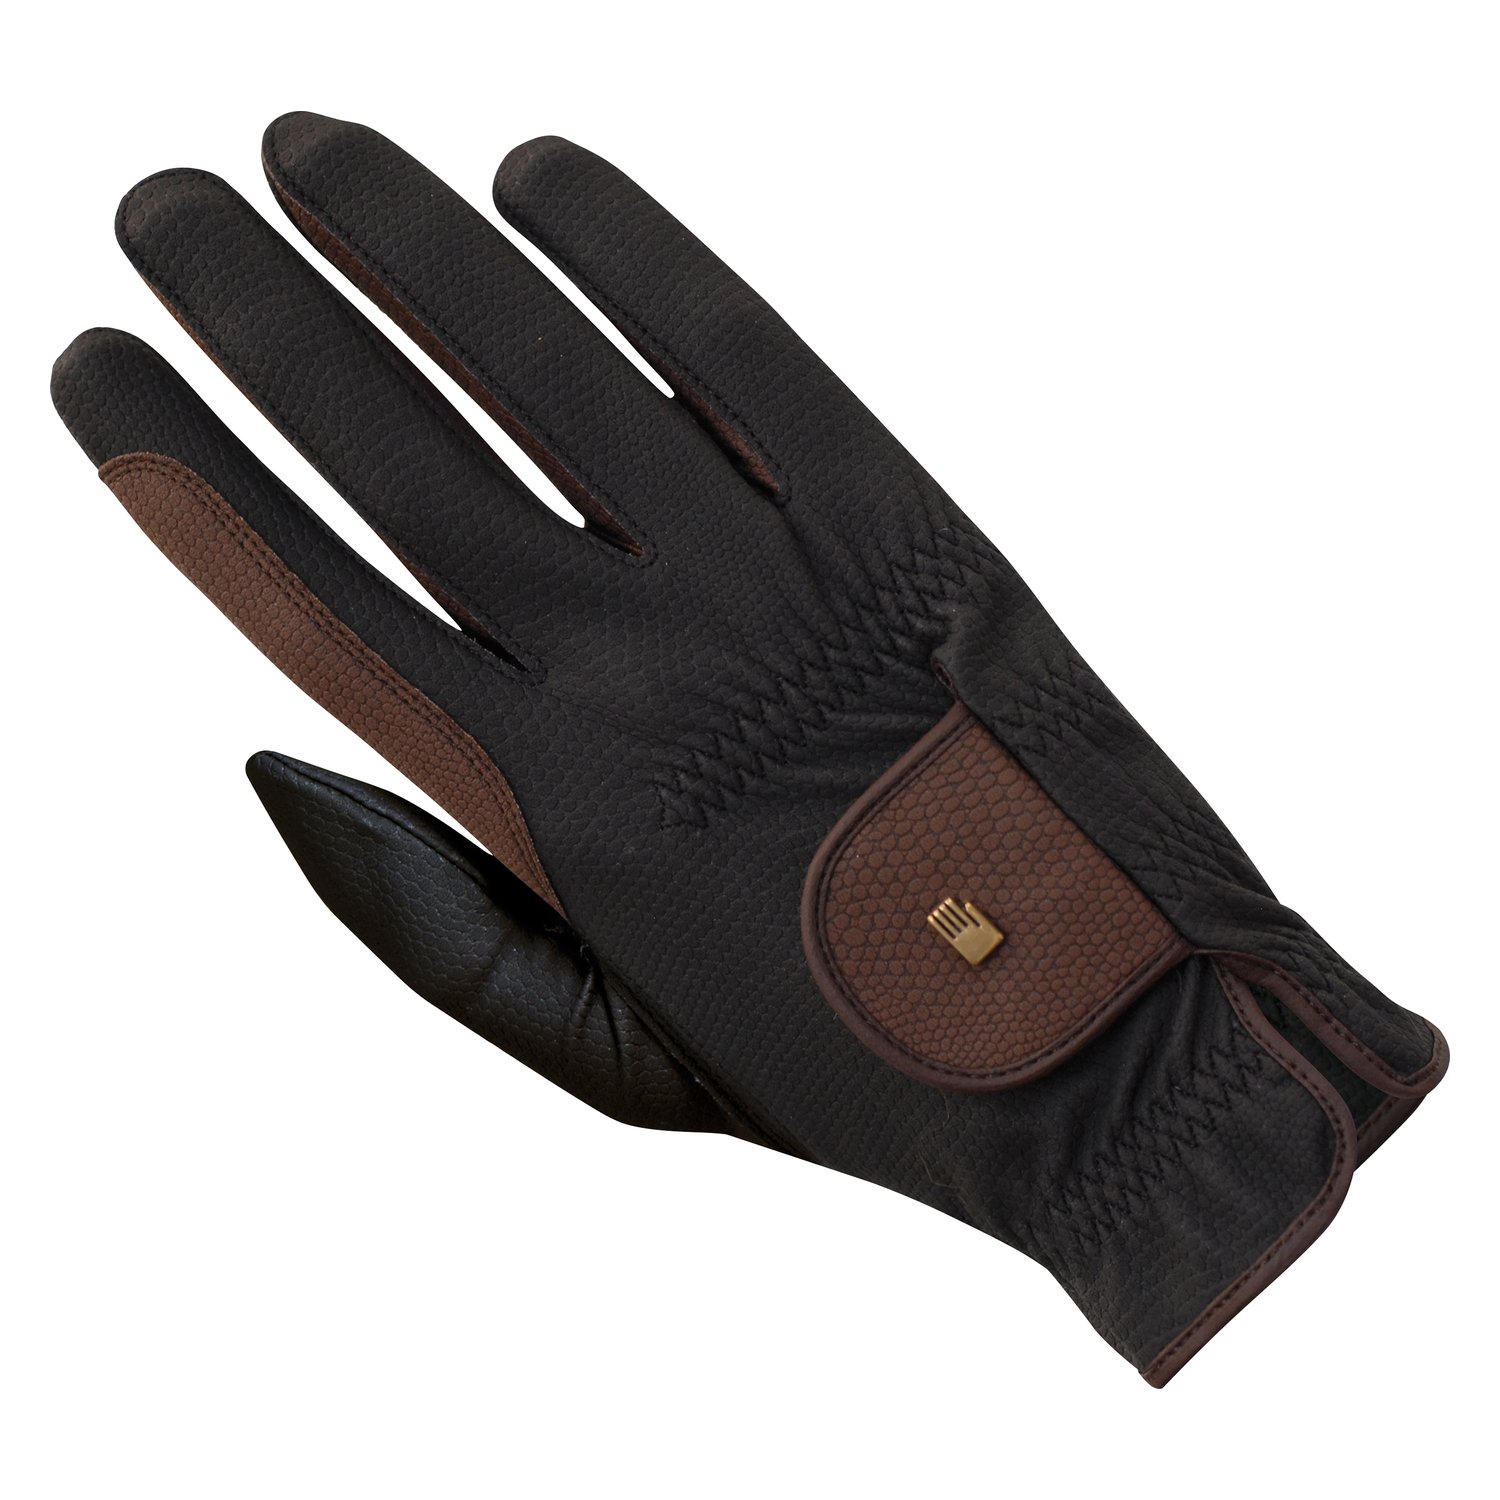 Roeckl Handschuhe Malta Winter schwarz/mokka | 7,0